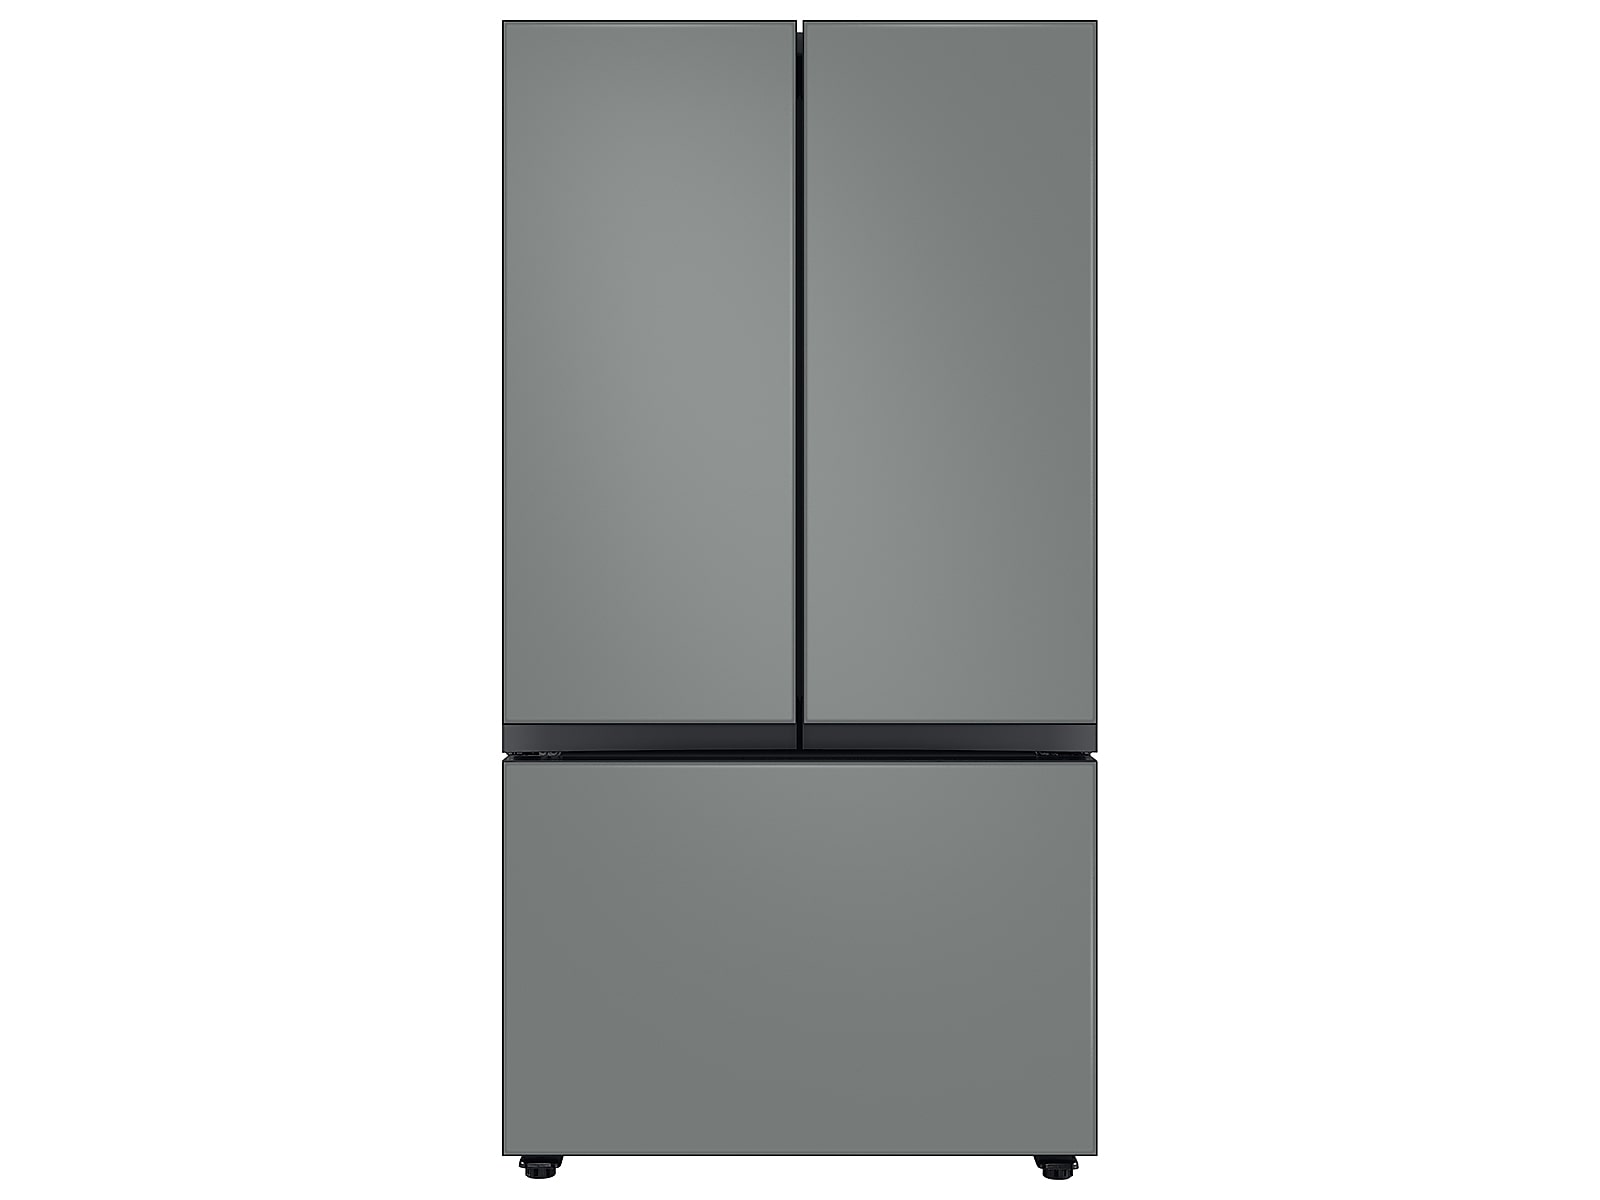 Samsung Bespoke 3-Door French Door Refrigerator in Stainless Steel (30 cu. ft.) with Beverage Center™ in Grey Glass(BNDL-1650311953417)